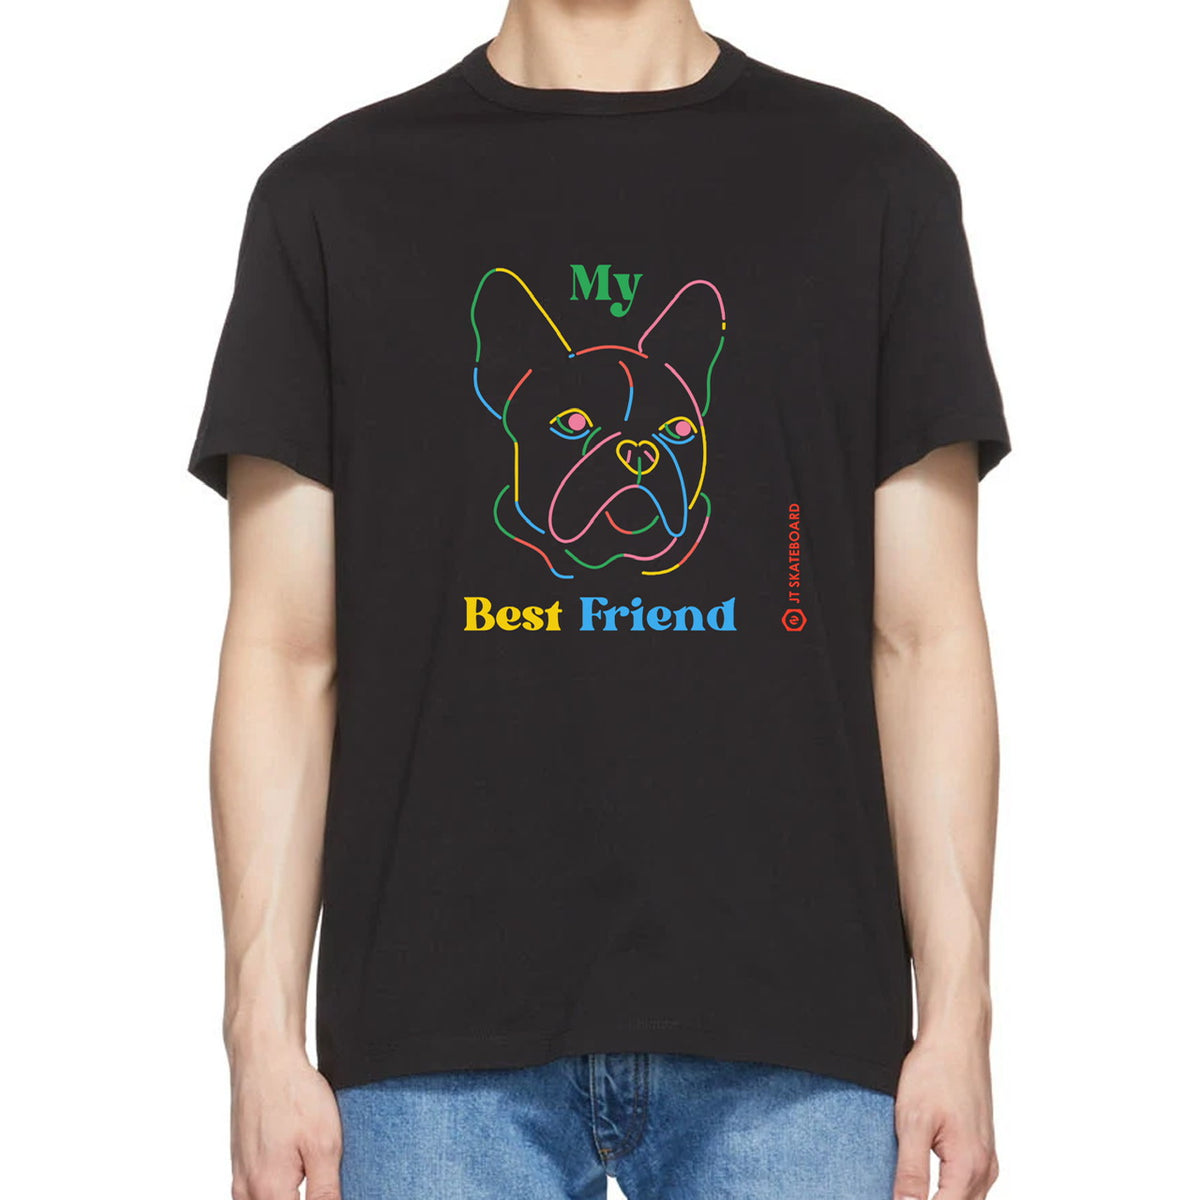 My Best Friend | Relaxed Loose Fitting T-Shirts - JT Skateboard - JT Skateboard